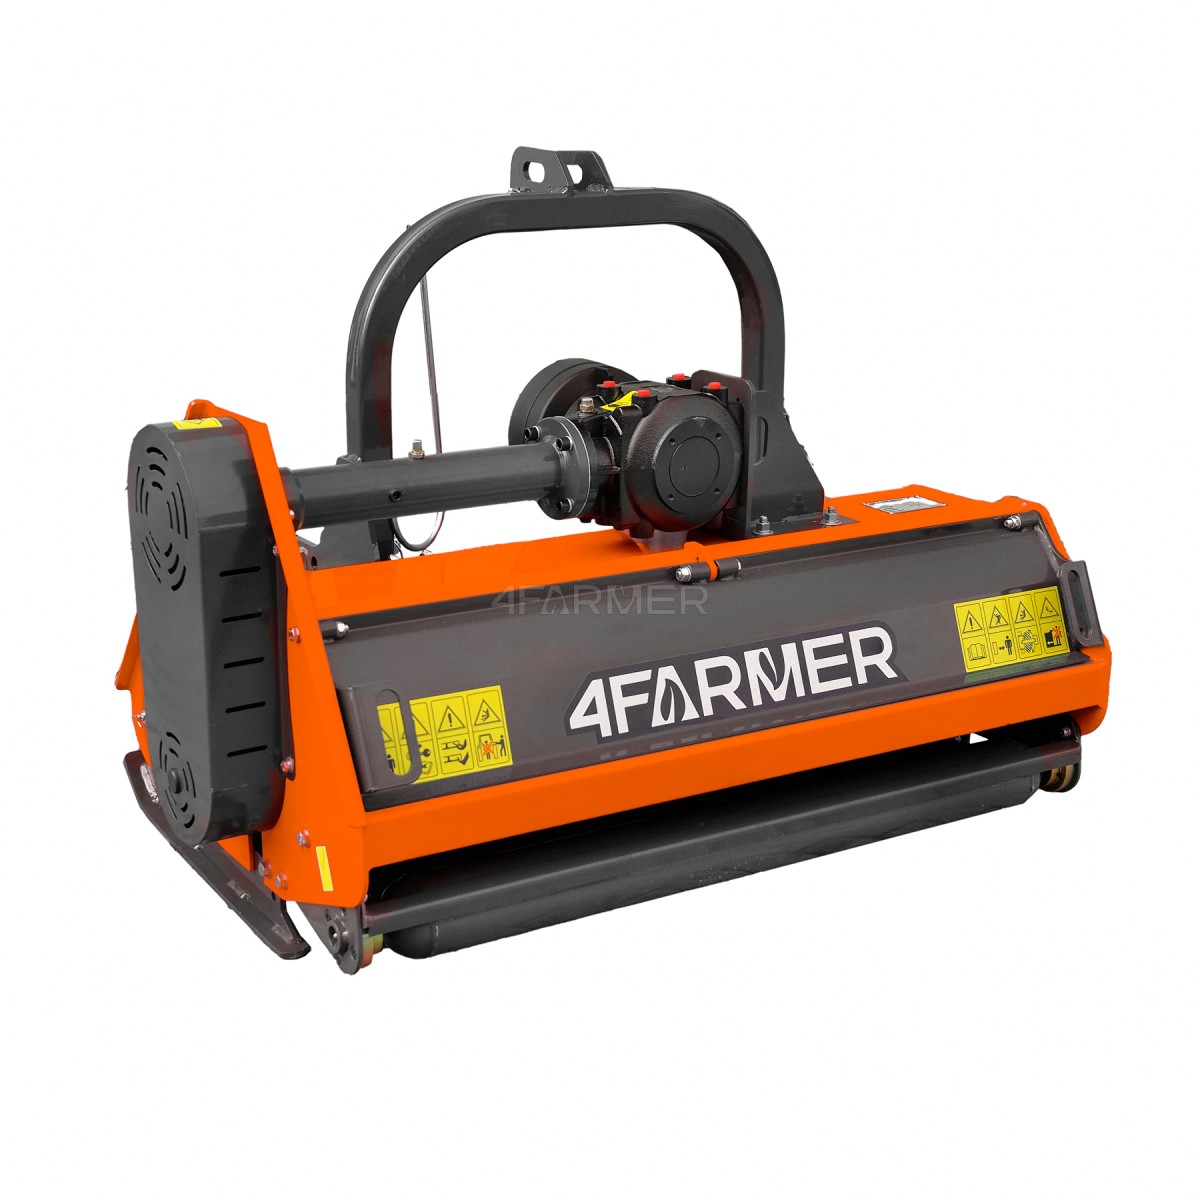 EFGC 115D 4FARMER flail mower - orange